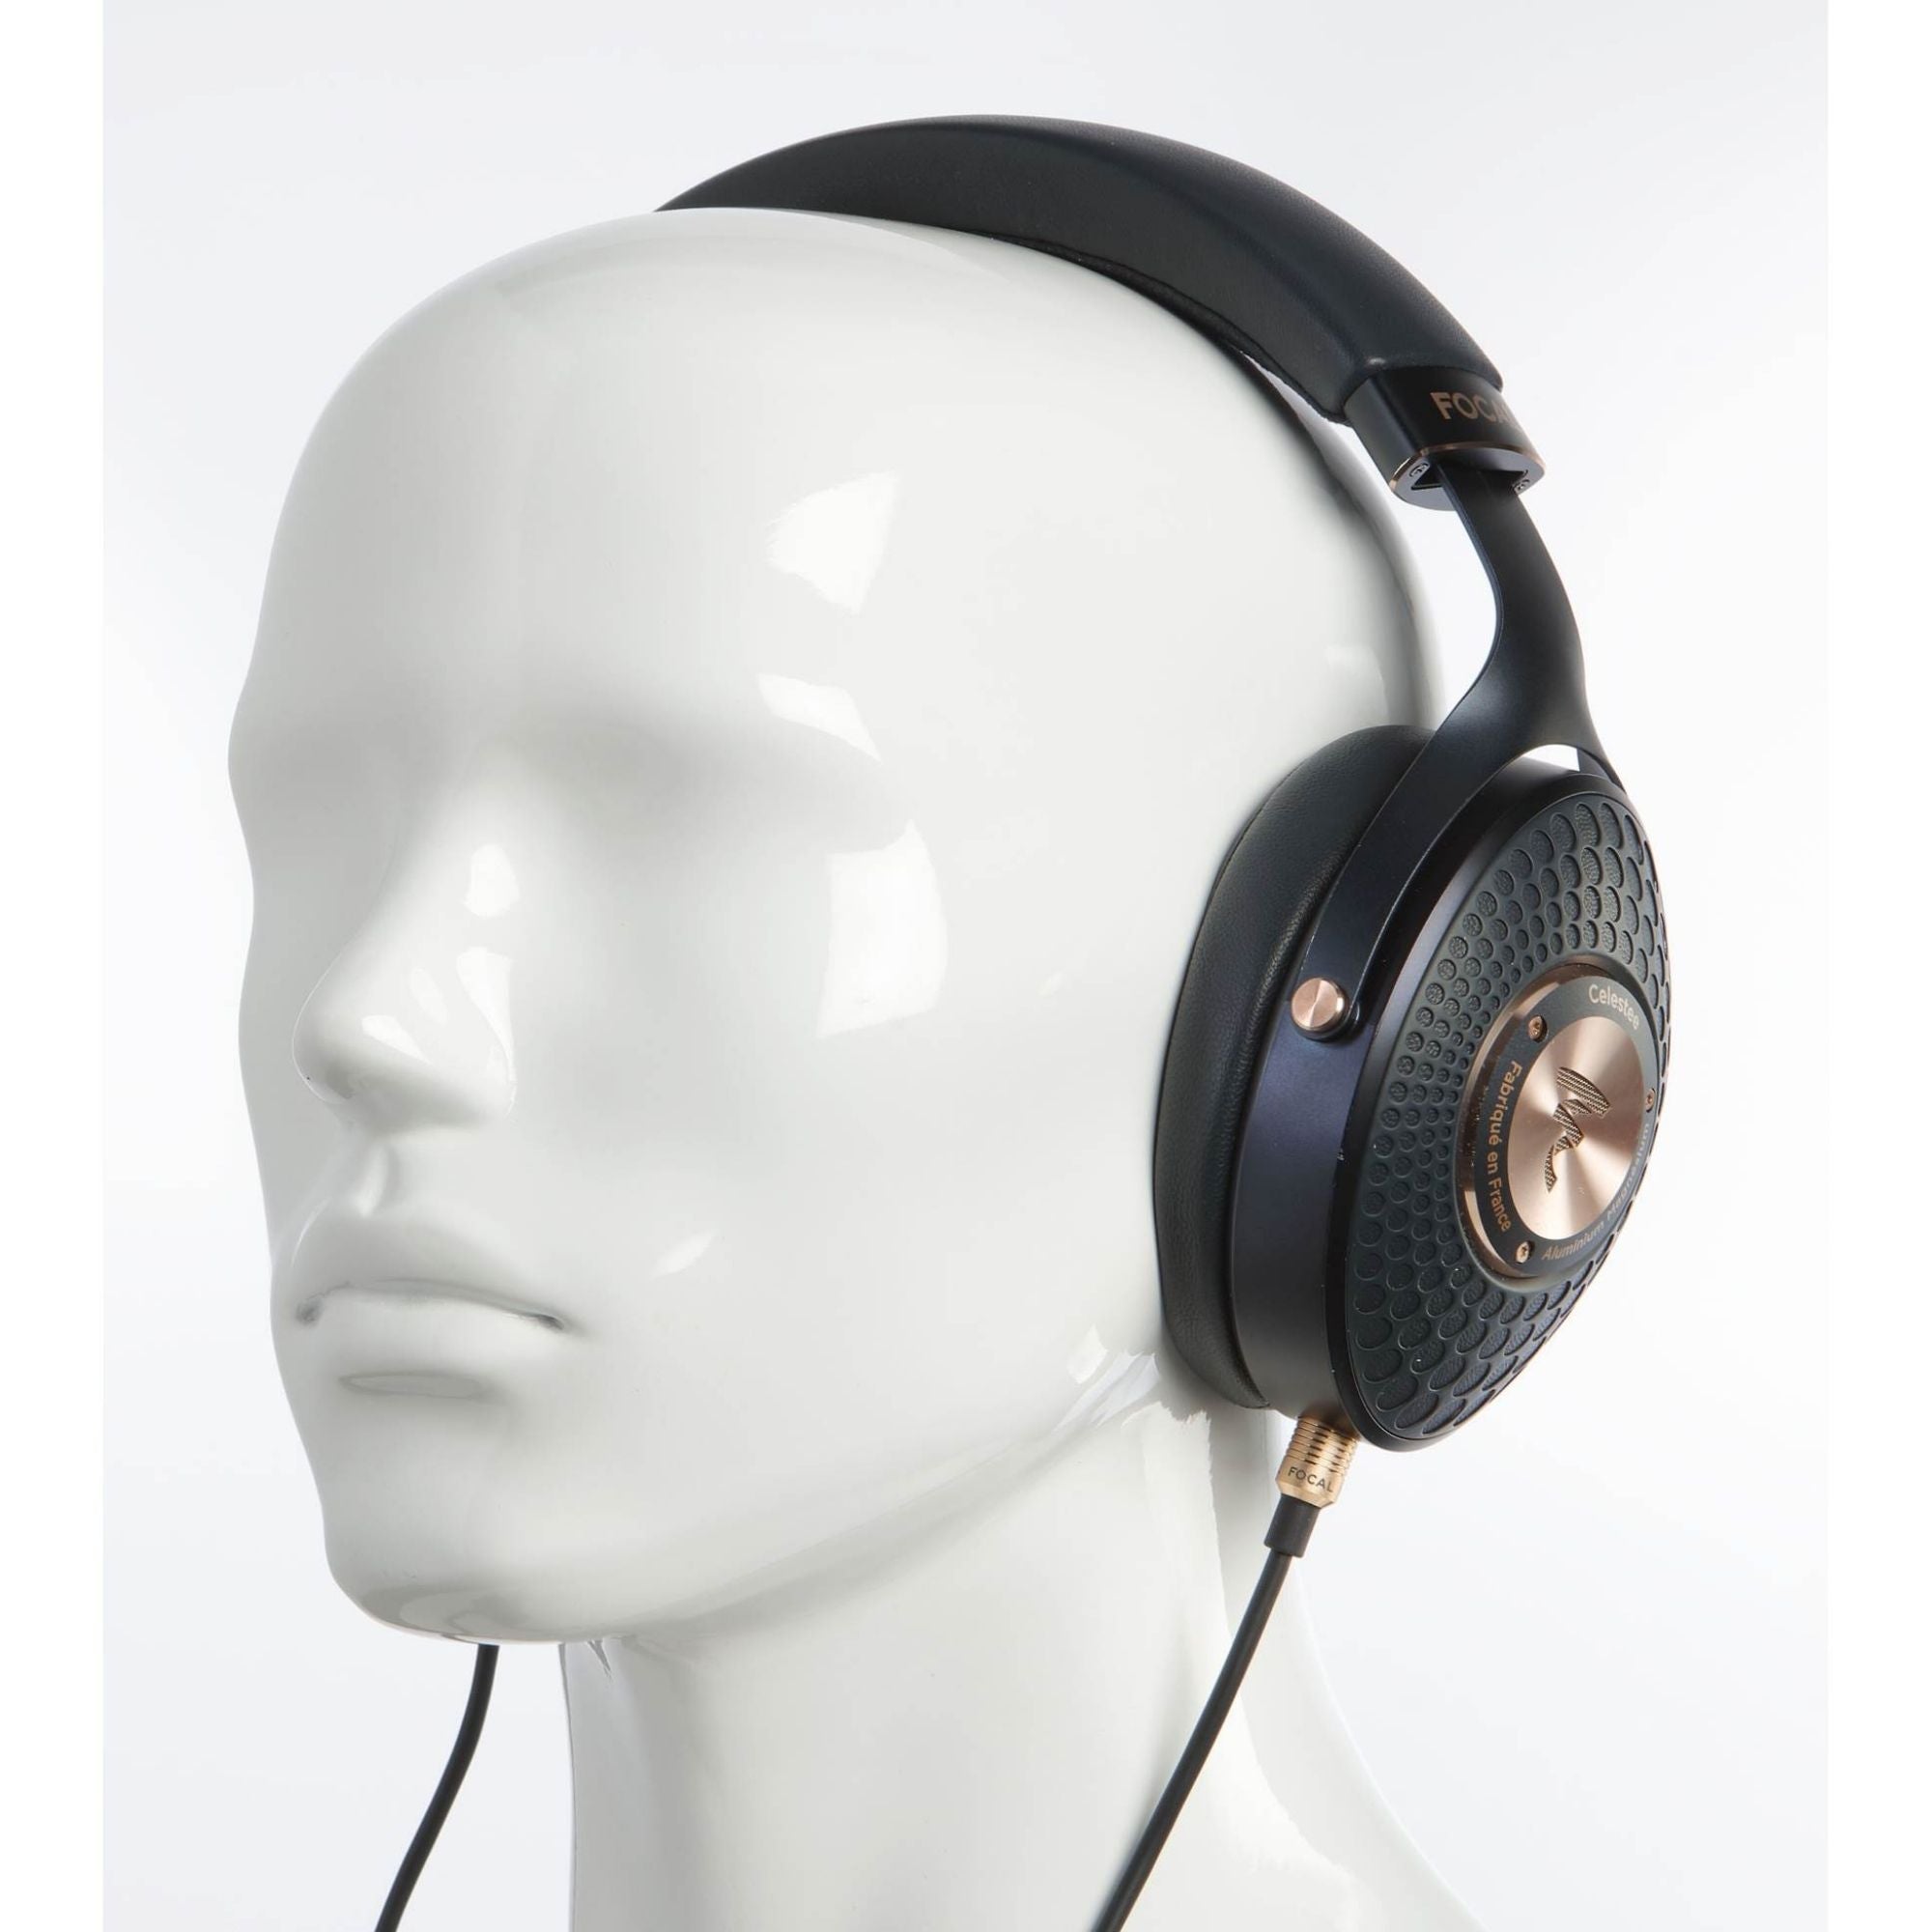 Focal Celestee - Closed-Back Headphones - AVStore